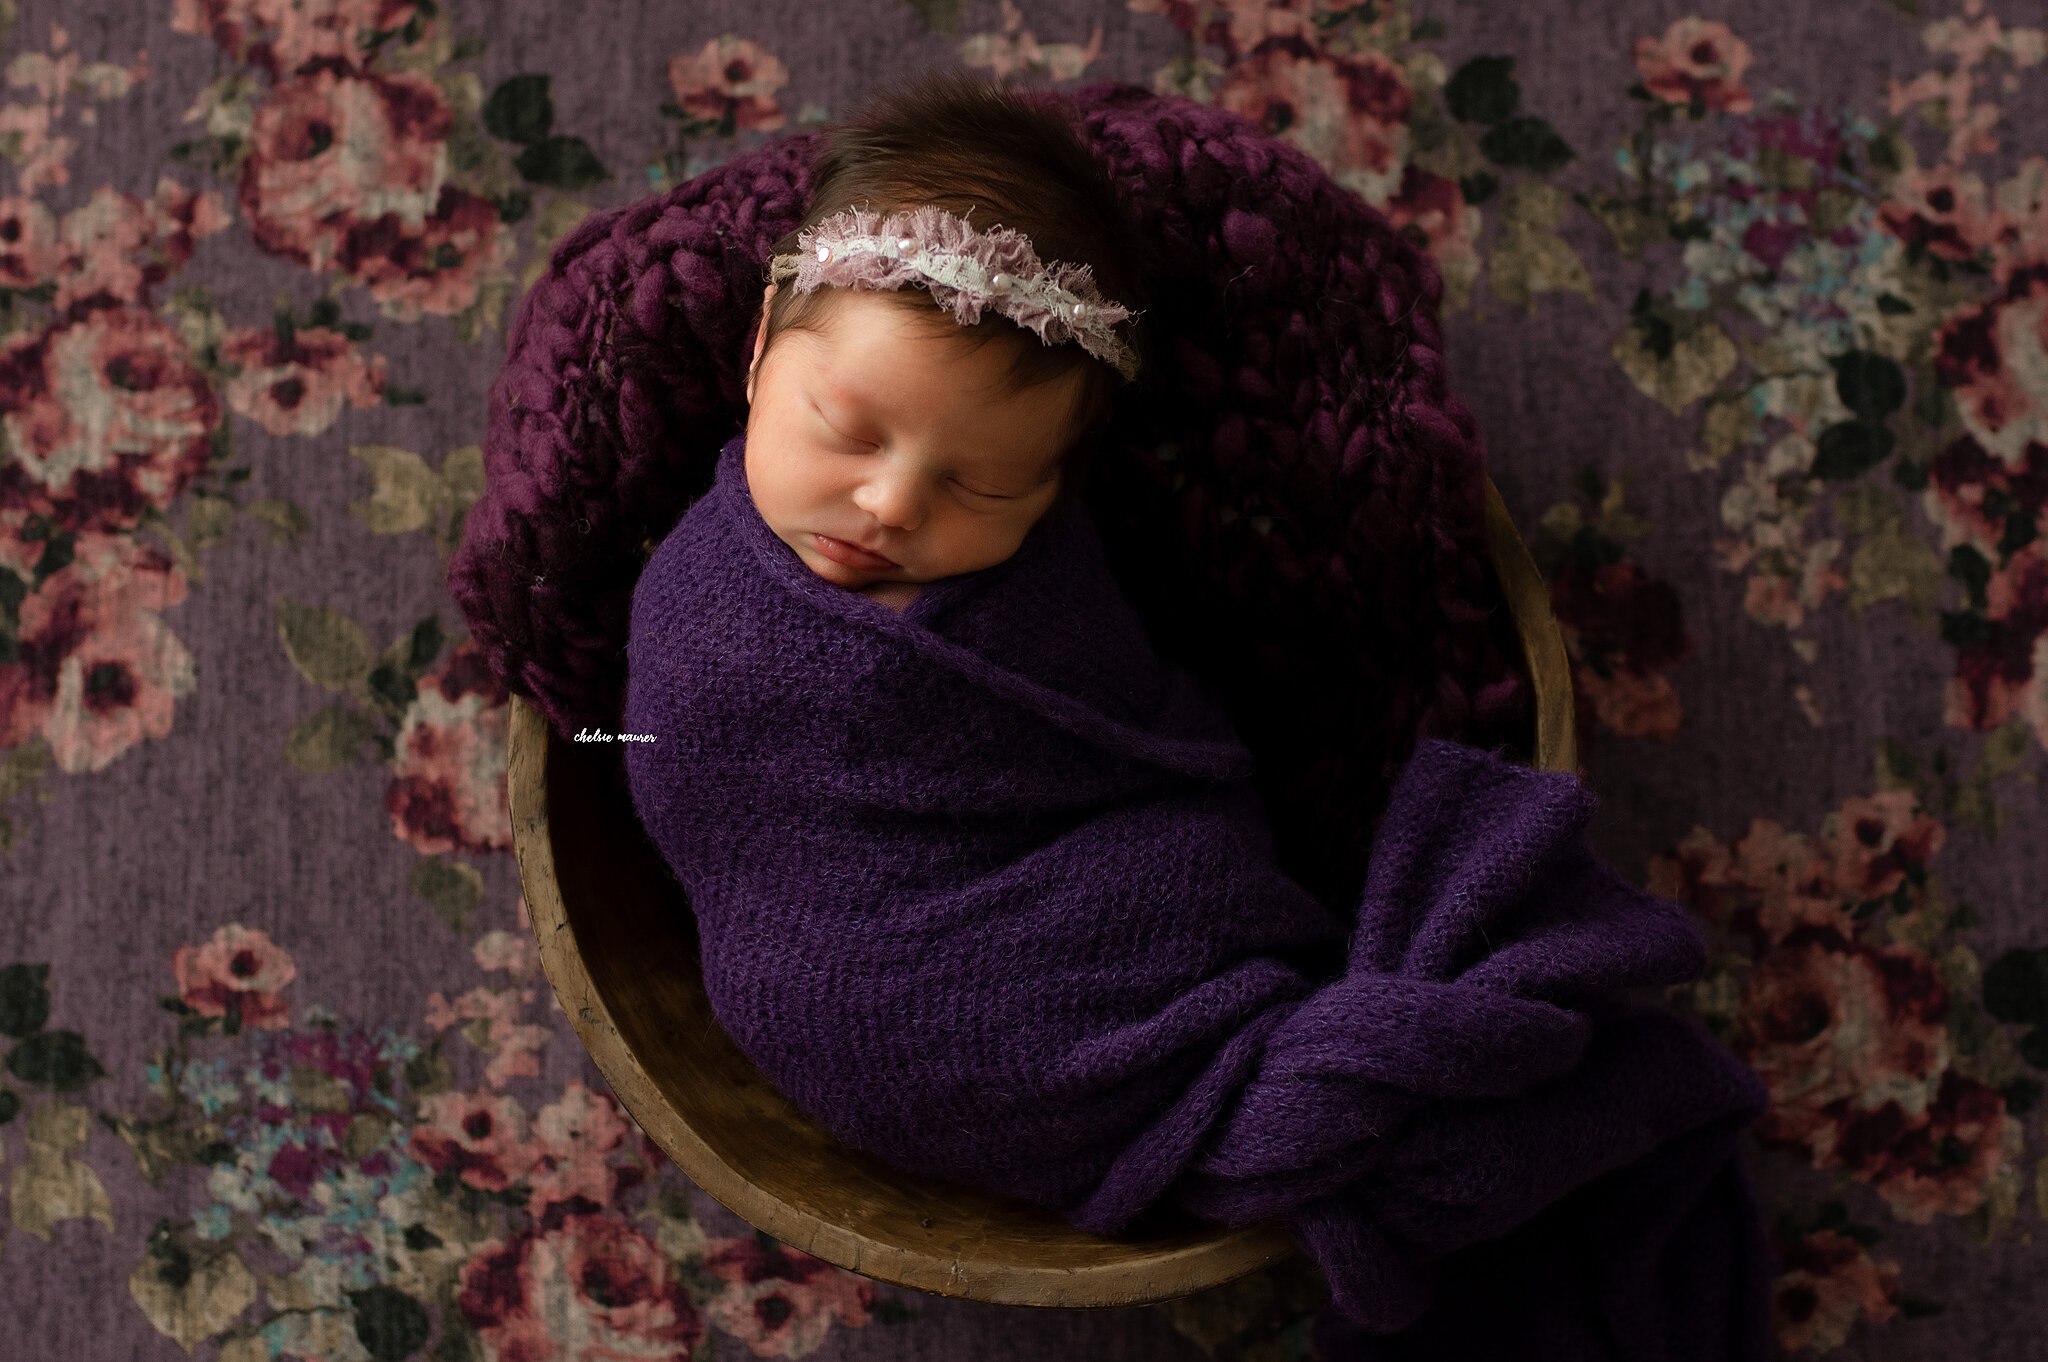 metro detroit newborn baby photography